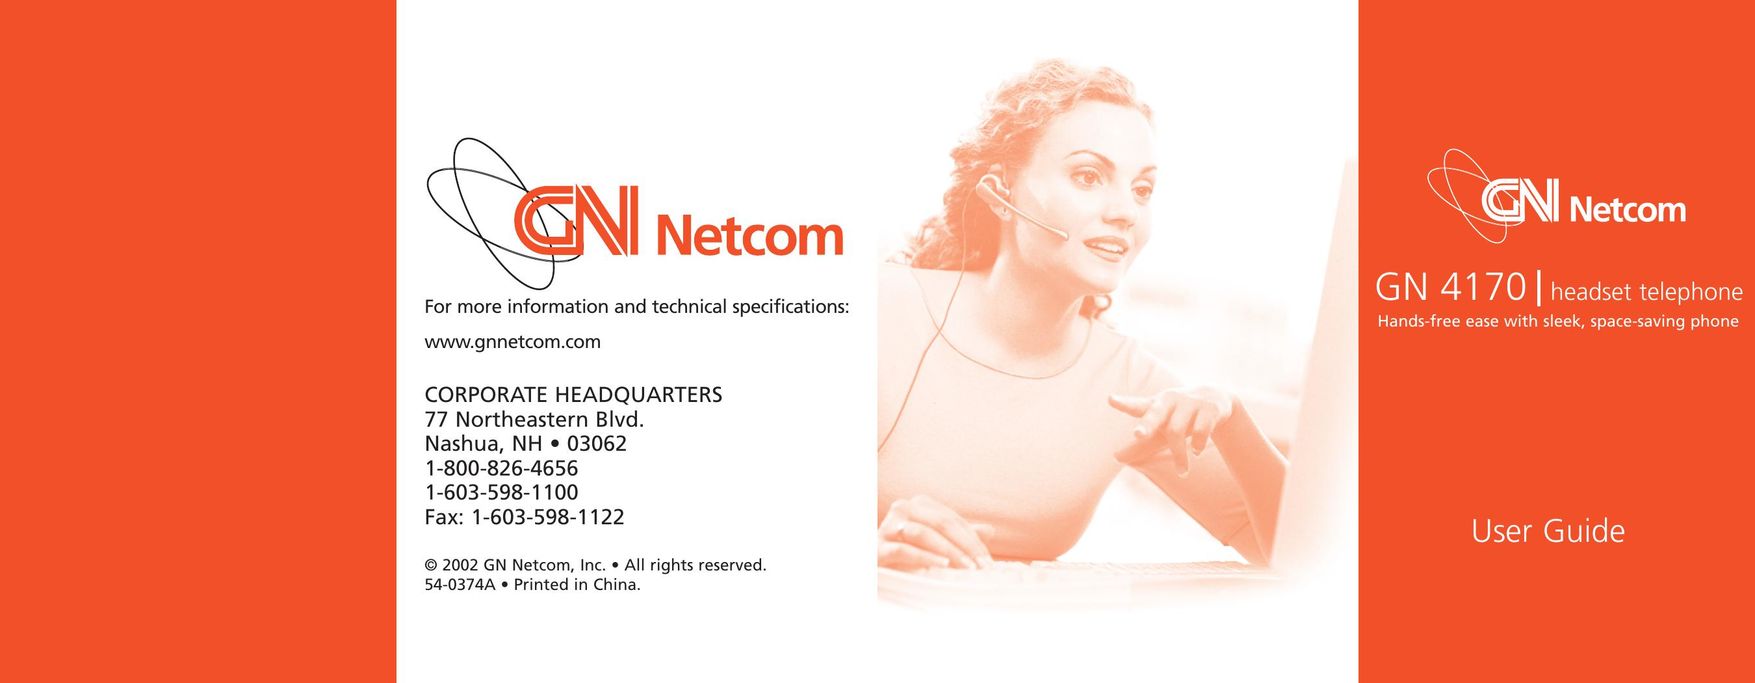 GN Netcom GN 4170 Telephone User Manual